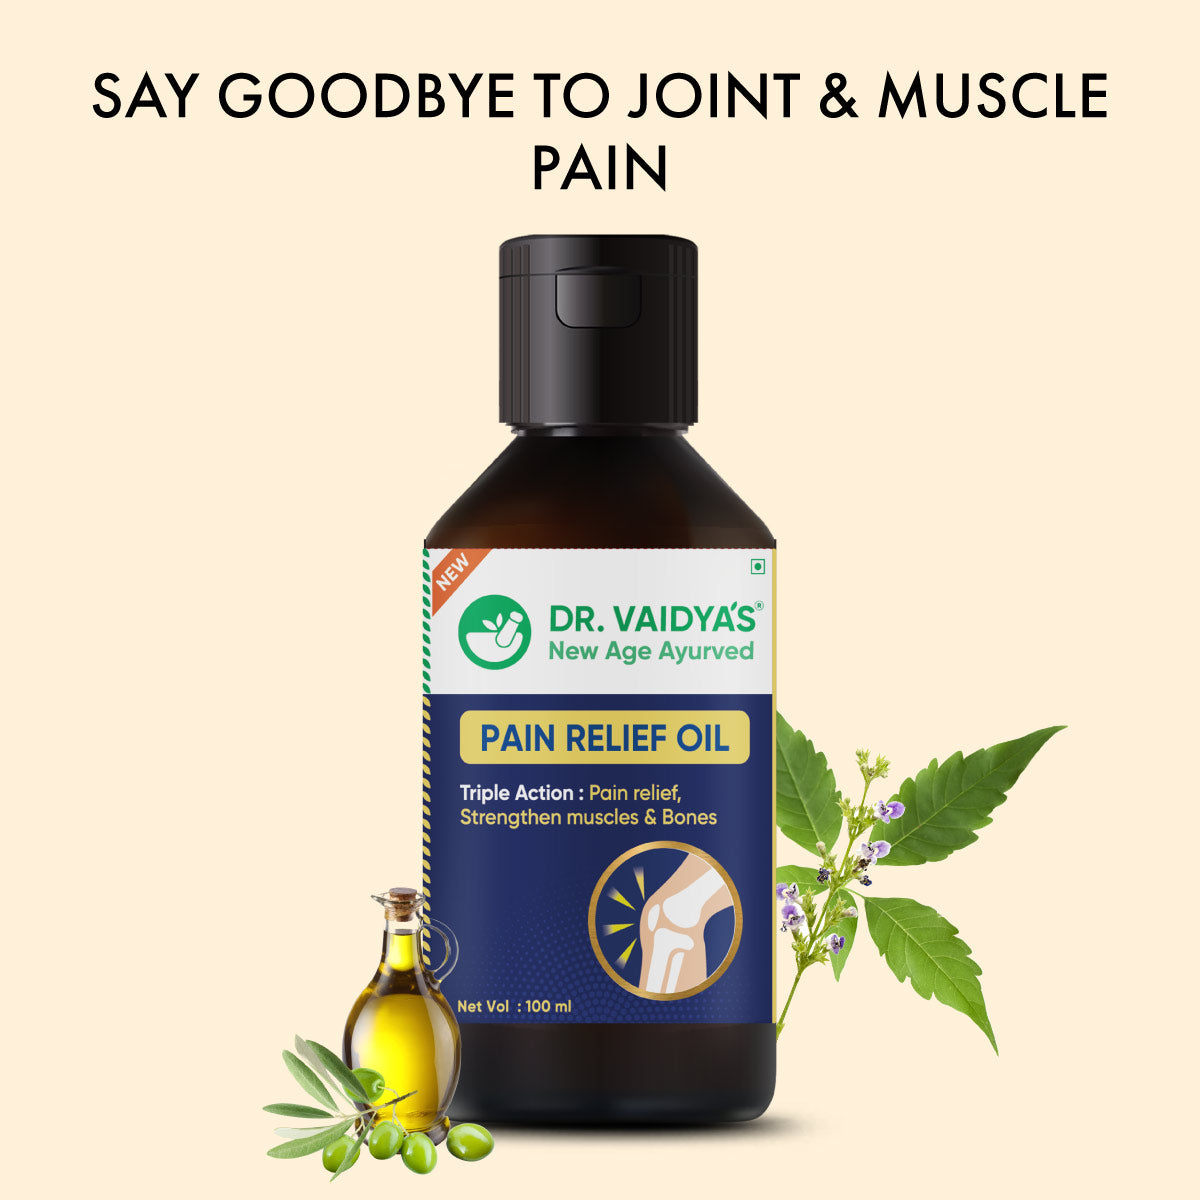 Dr. Vaidya's Pain Relief Oil